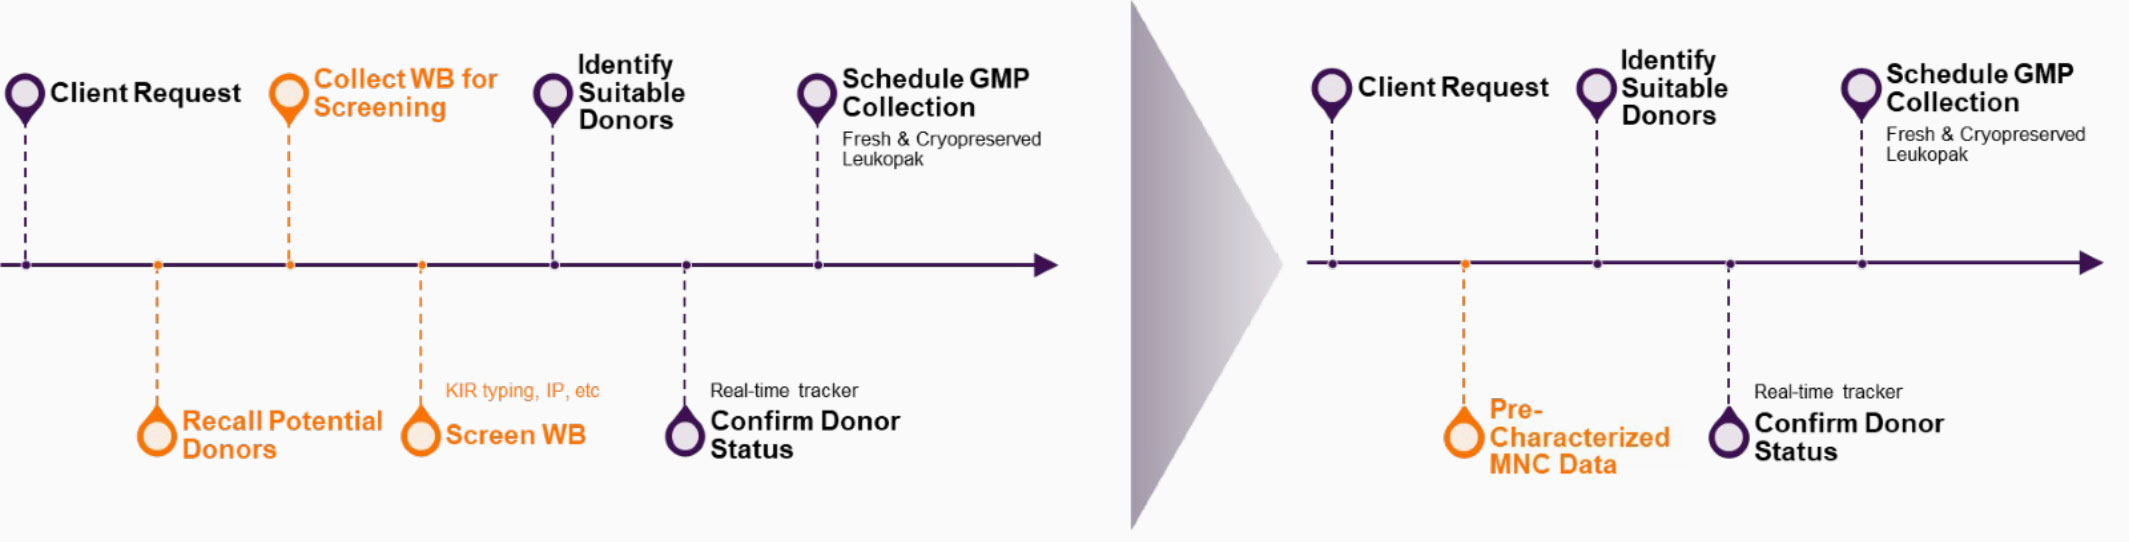 Streamlined Donor Workflow